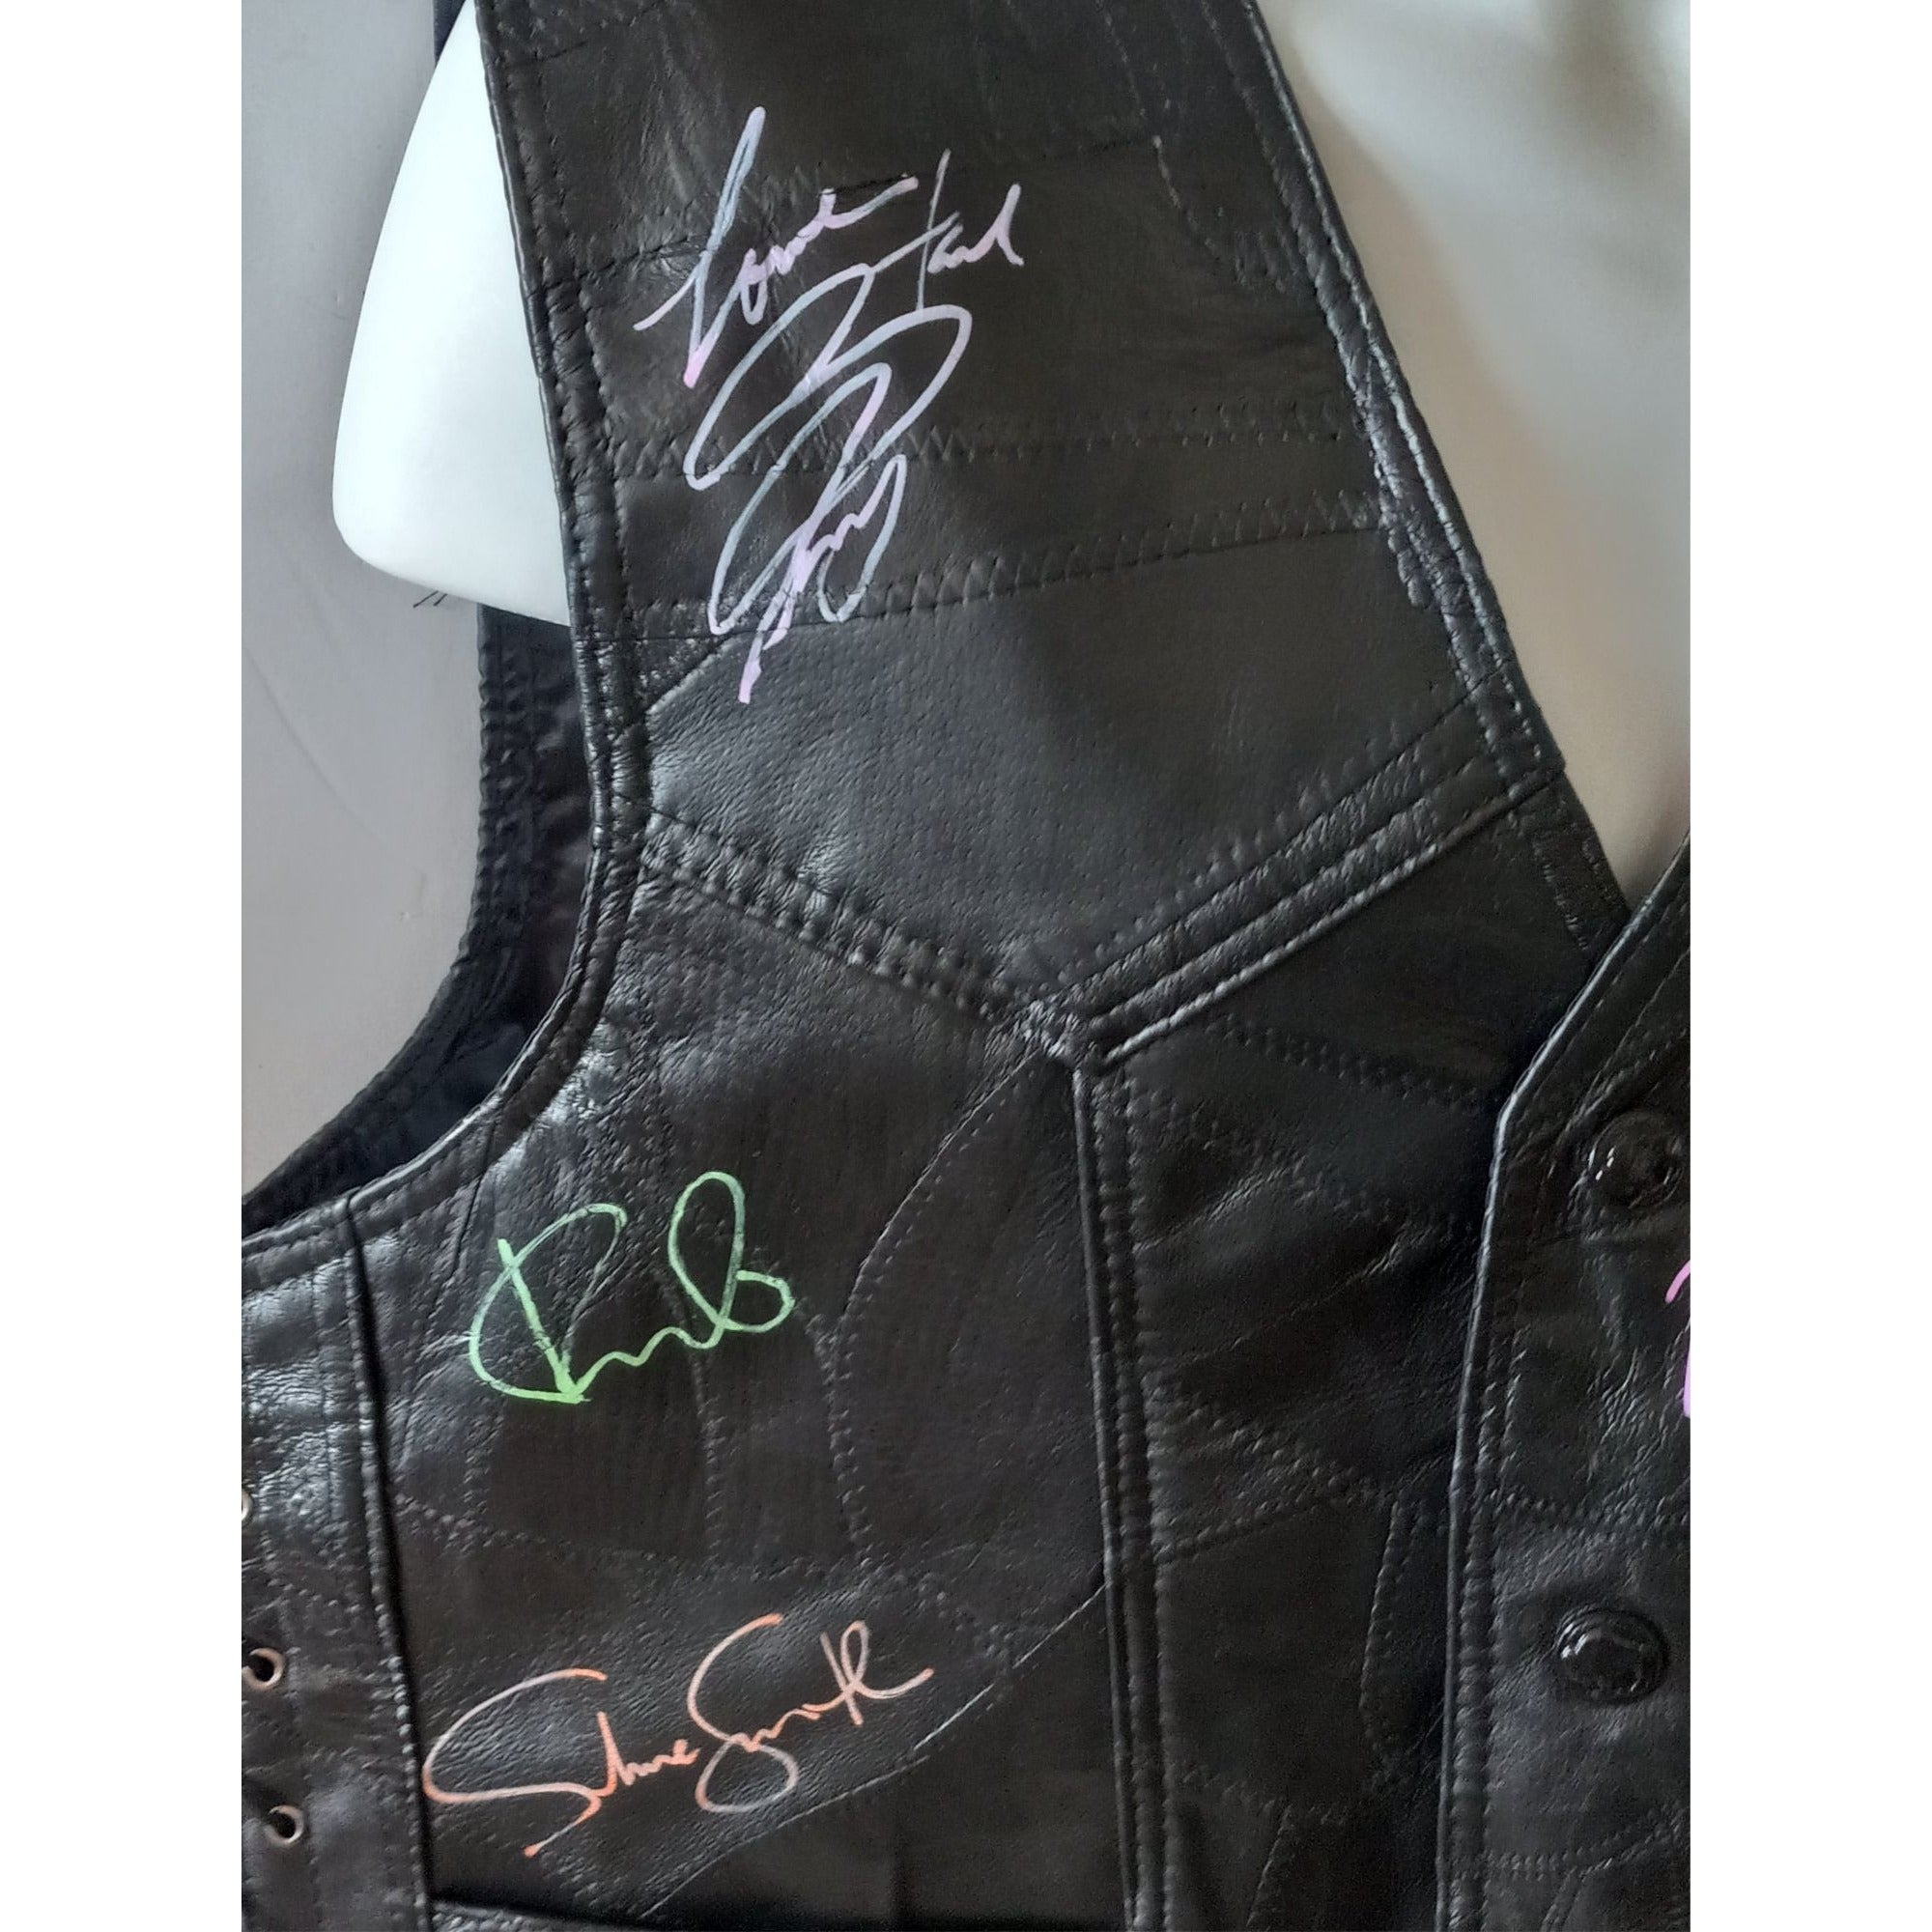 Journey band signed leather vest